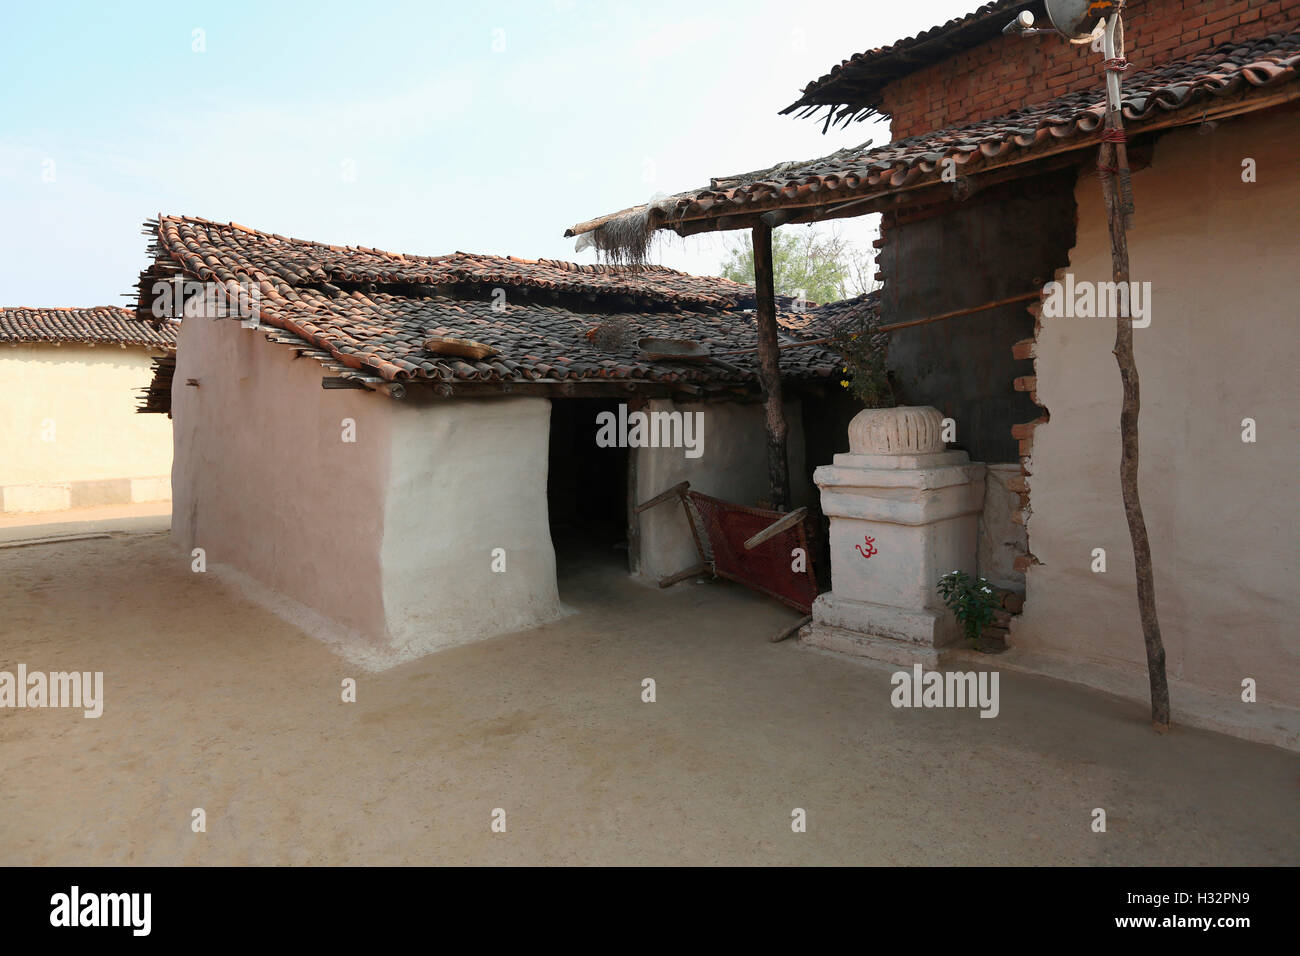 SAWAR TRIBE, Traditional Mud House, Diwanpali Village, Saraipali Panchayat, Mahasamund Block, Chattisgadh, India Stock Photo